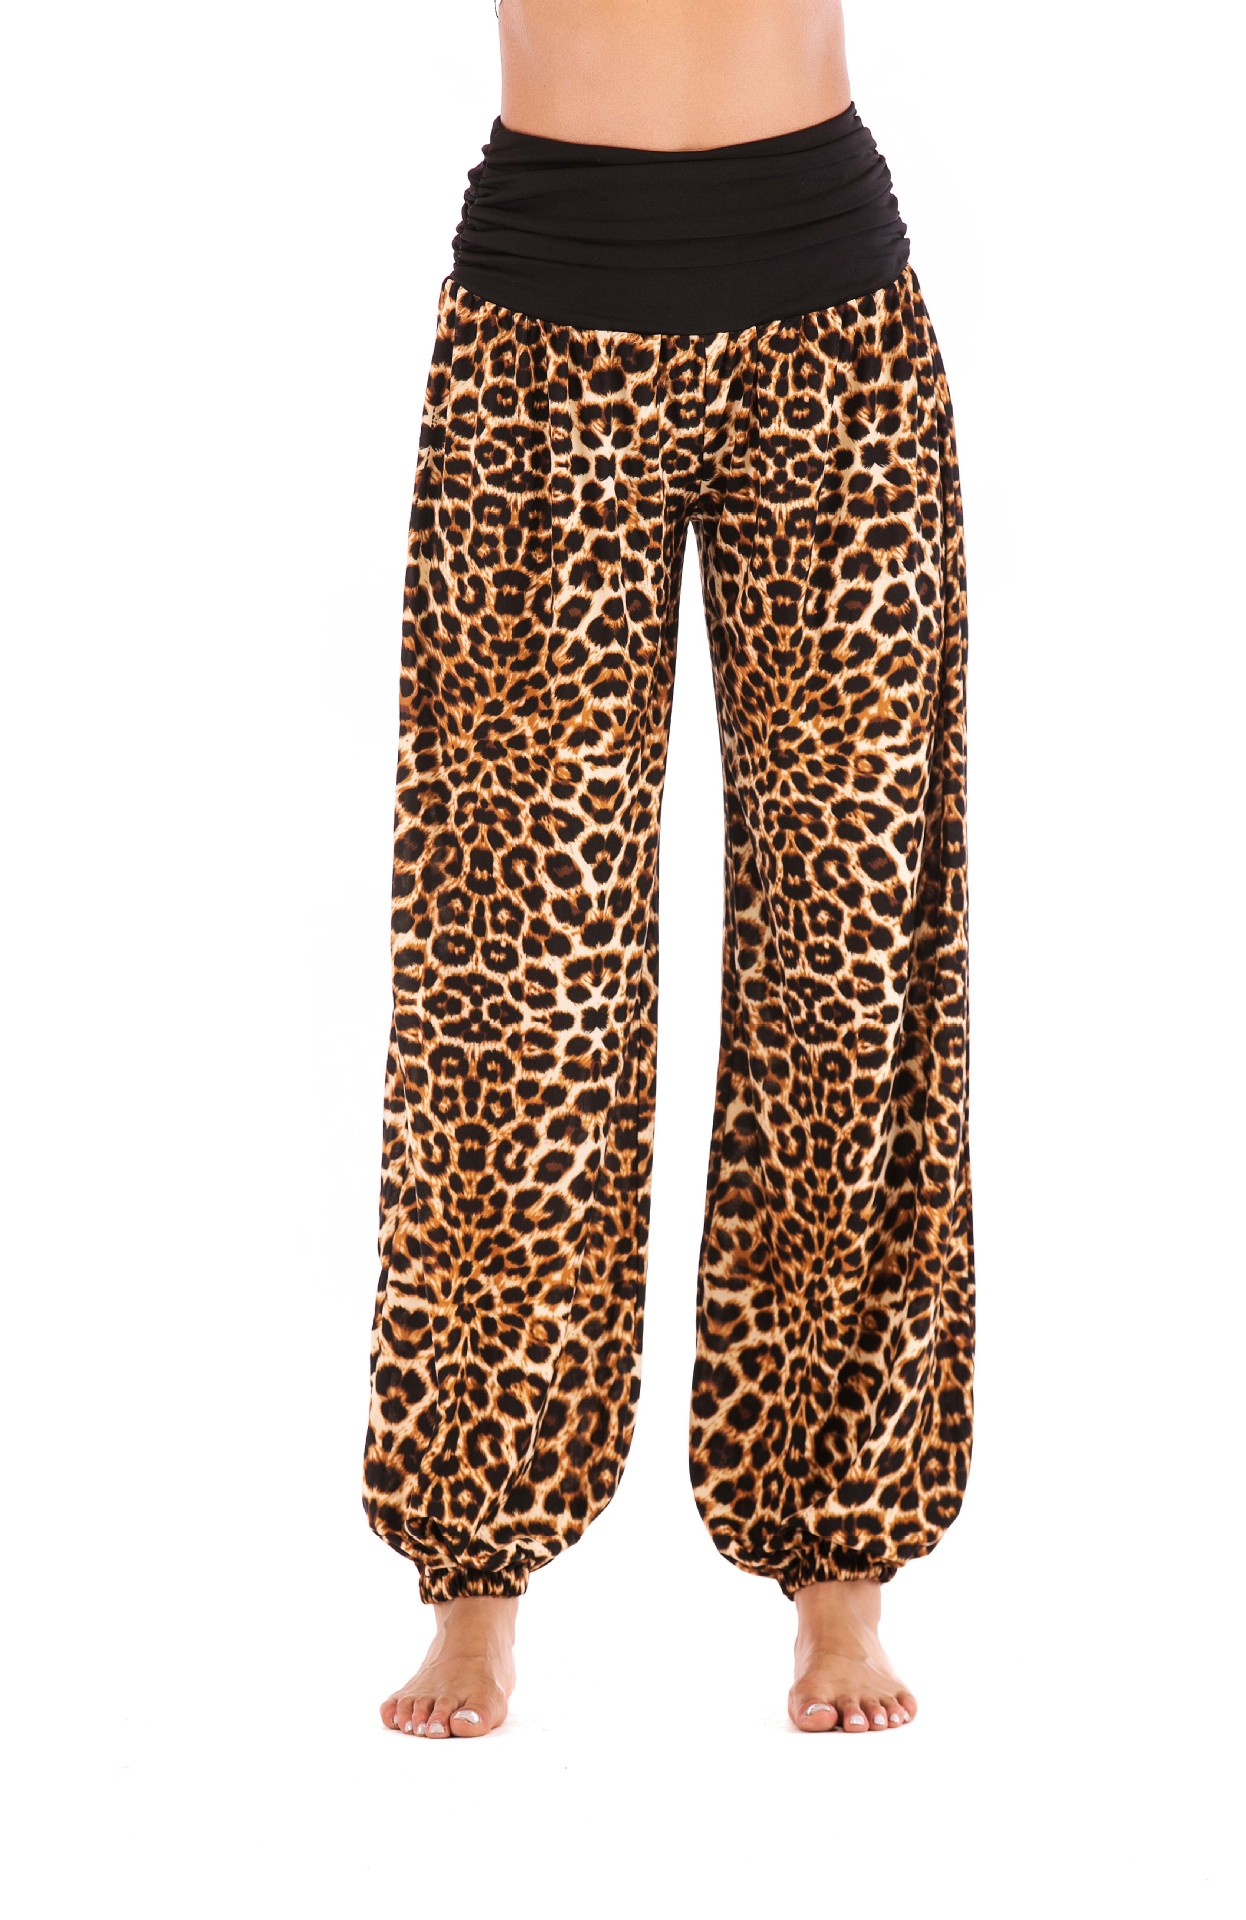 Women Leopard Printed Yoga Pants High Waist Daily Casual Loose Long Wide Leg Sport Workout Trousers leopard